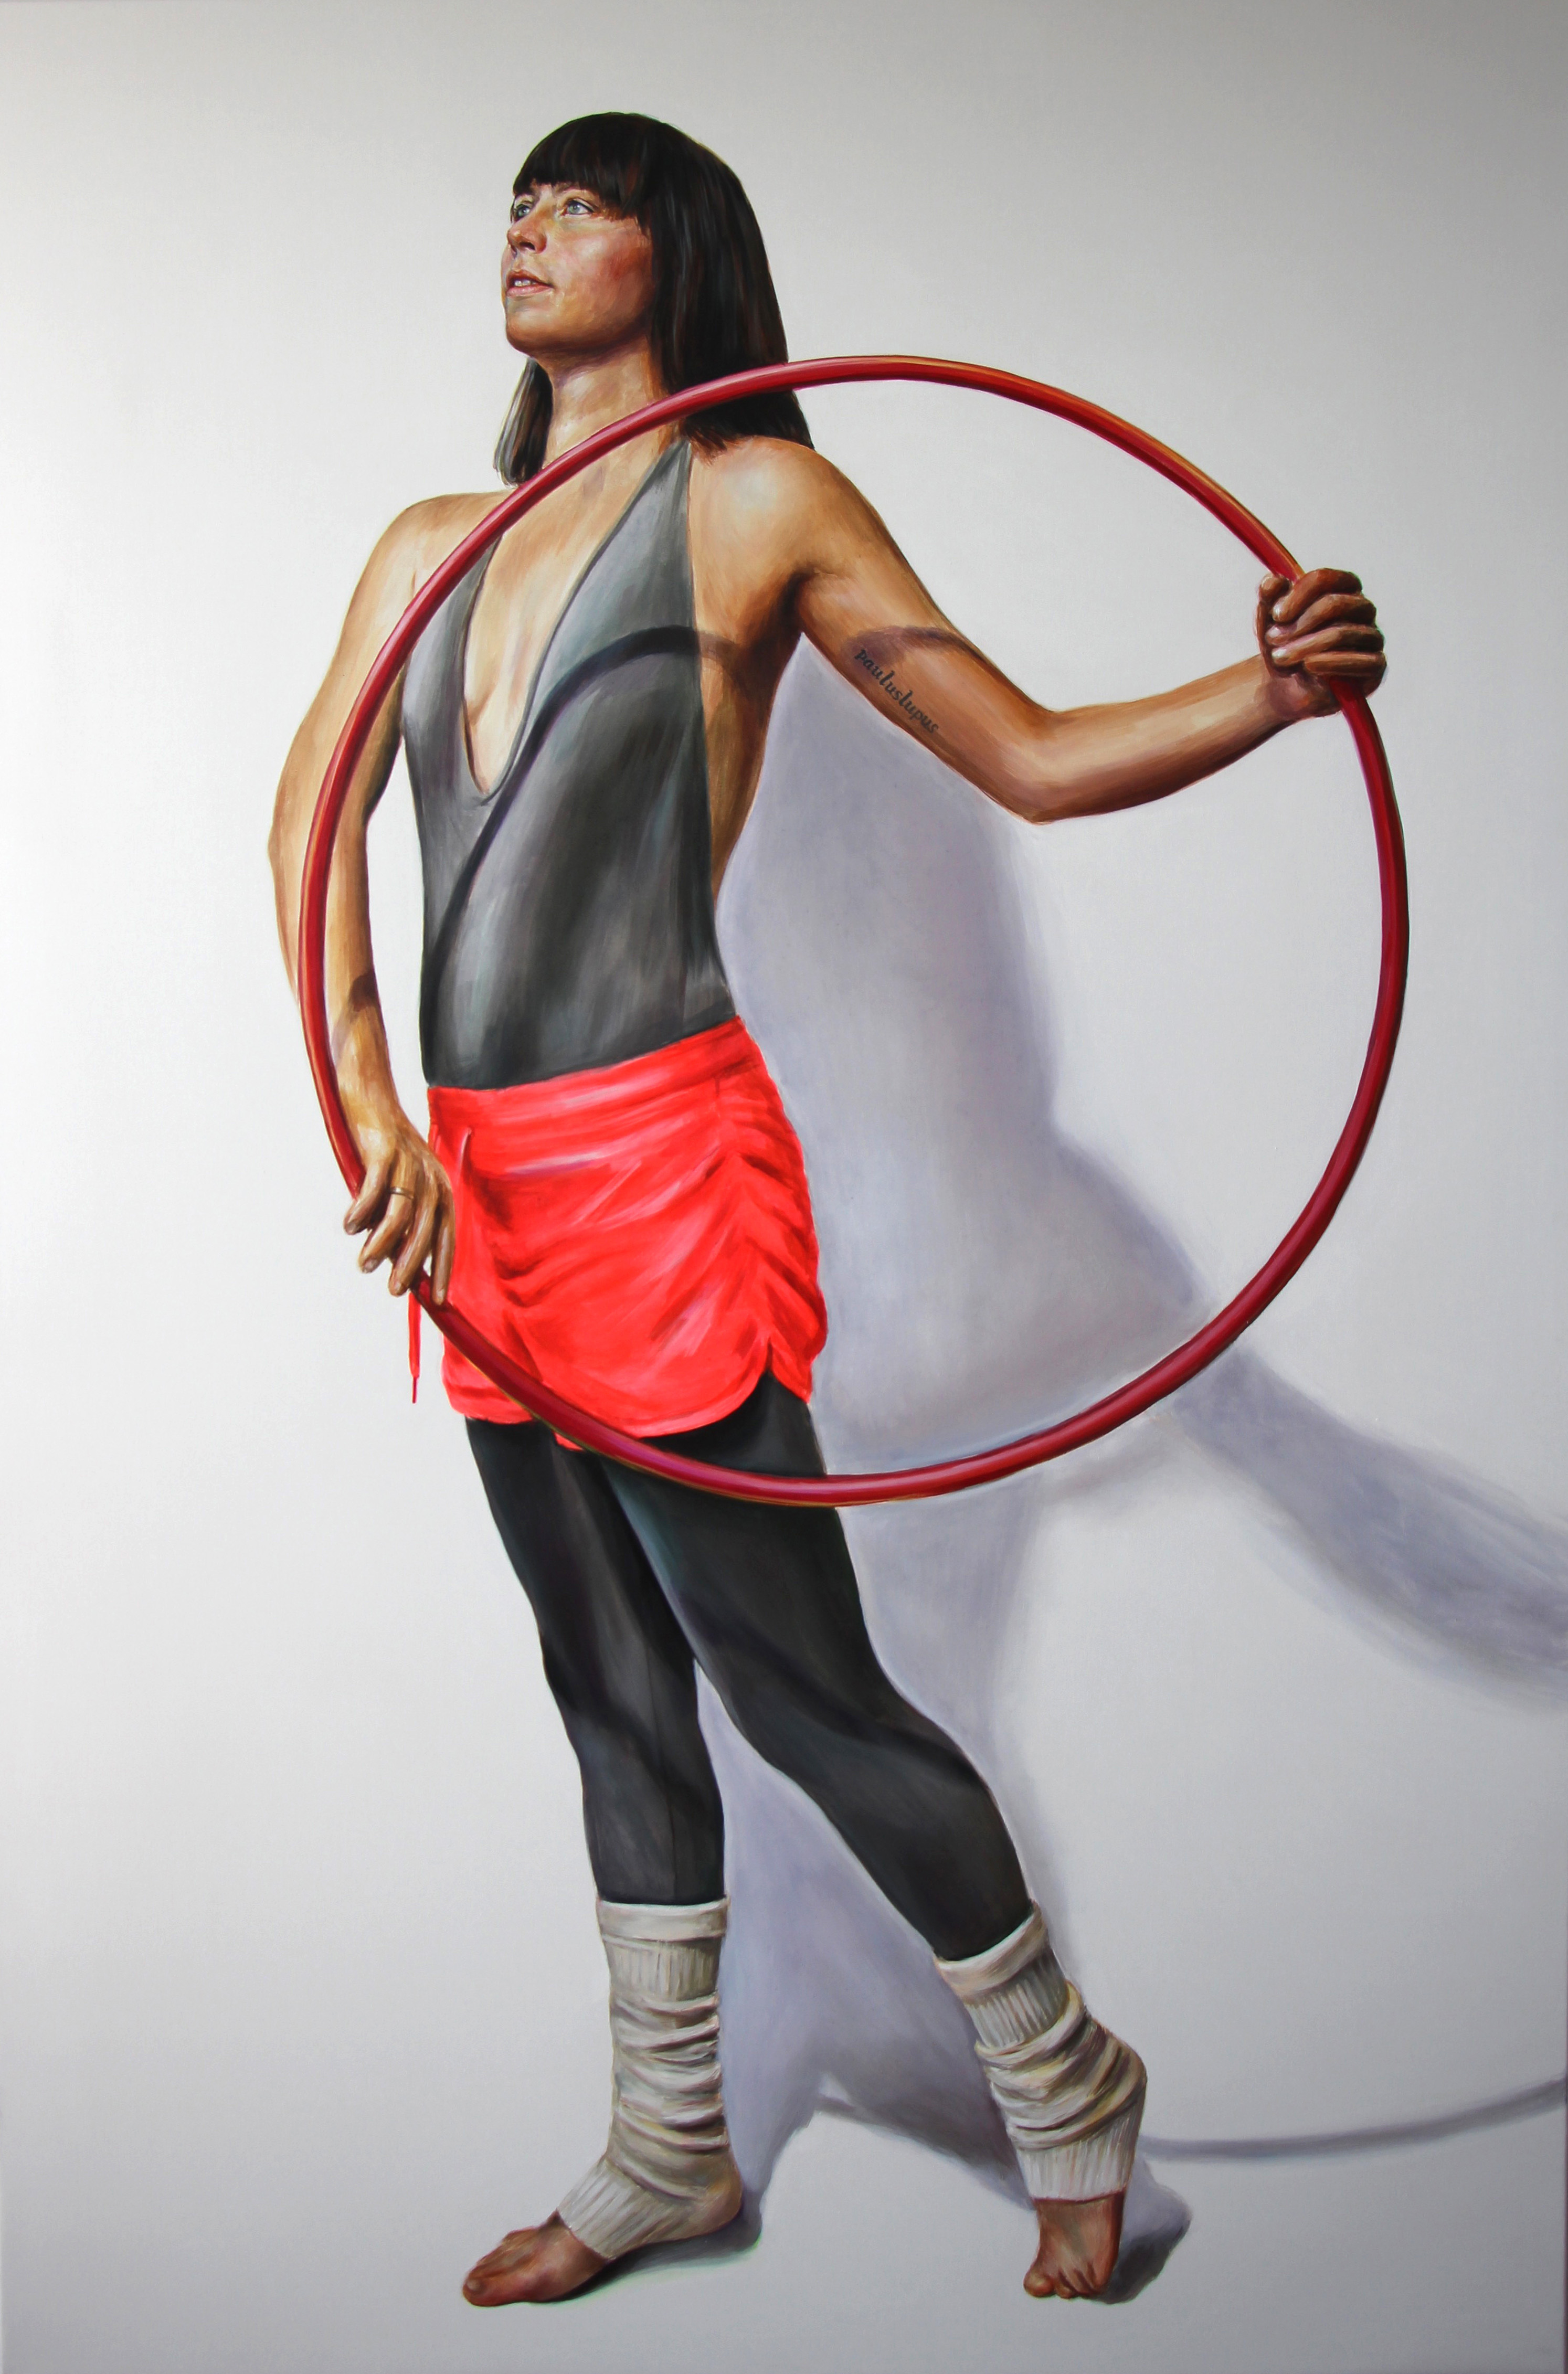 Gymnaste 6 (Anna) - Huile sur toile, 195 x 130 cm, 2017.